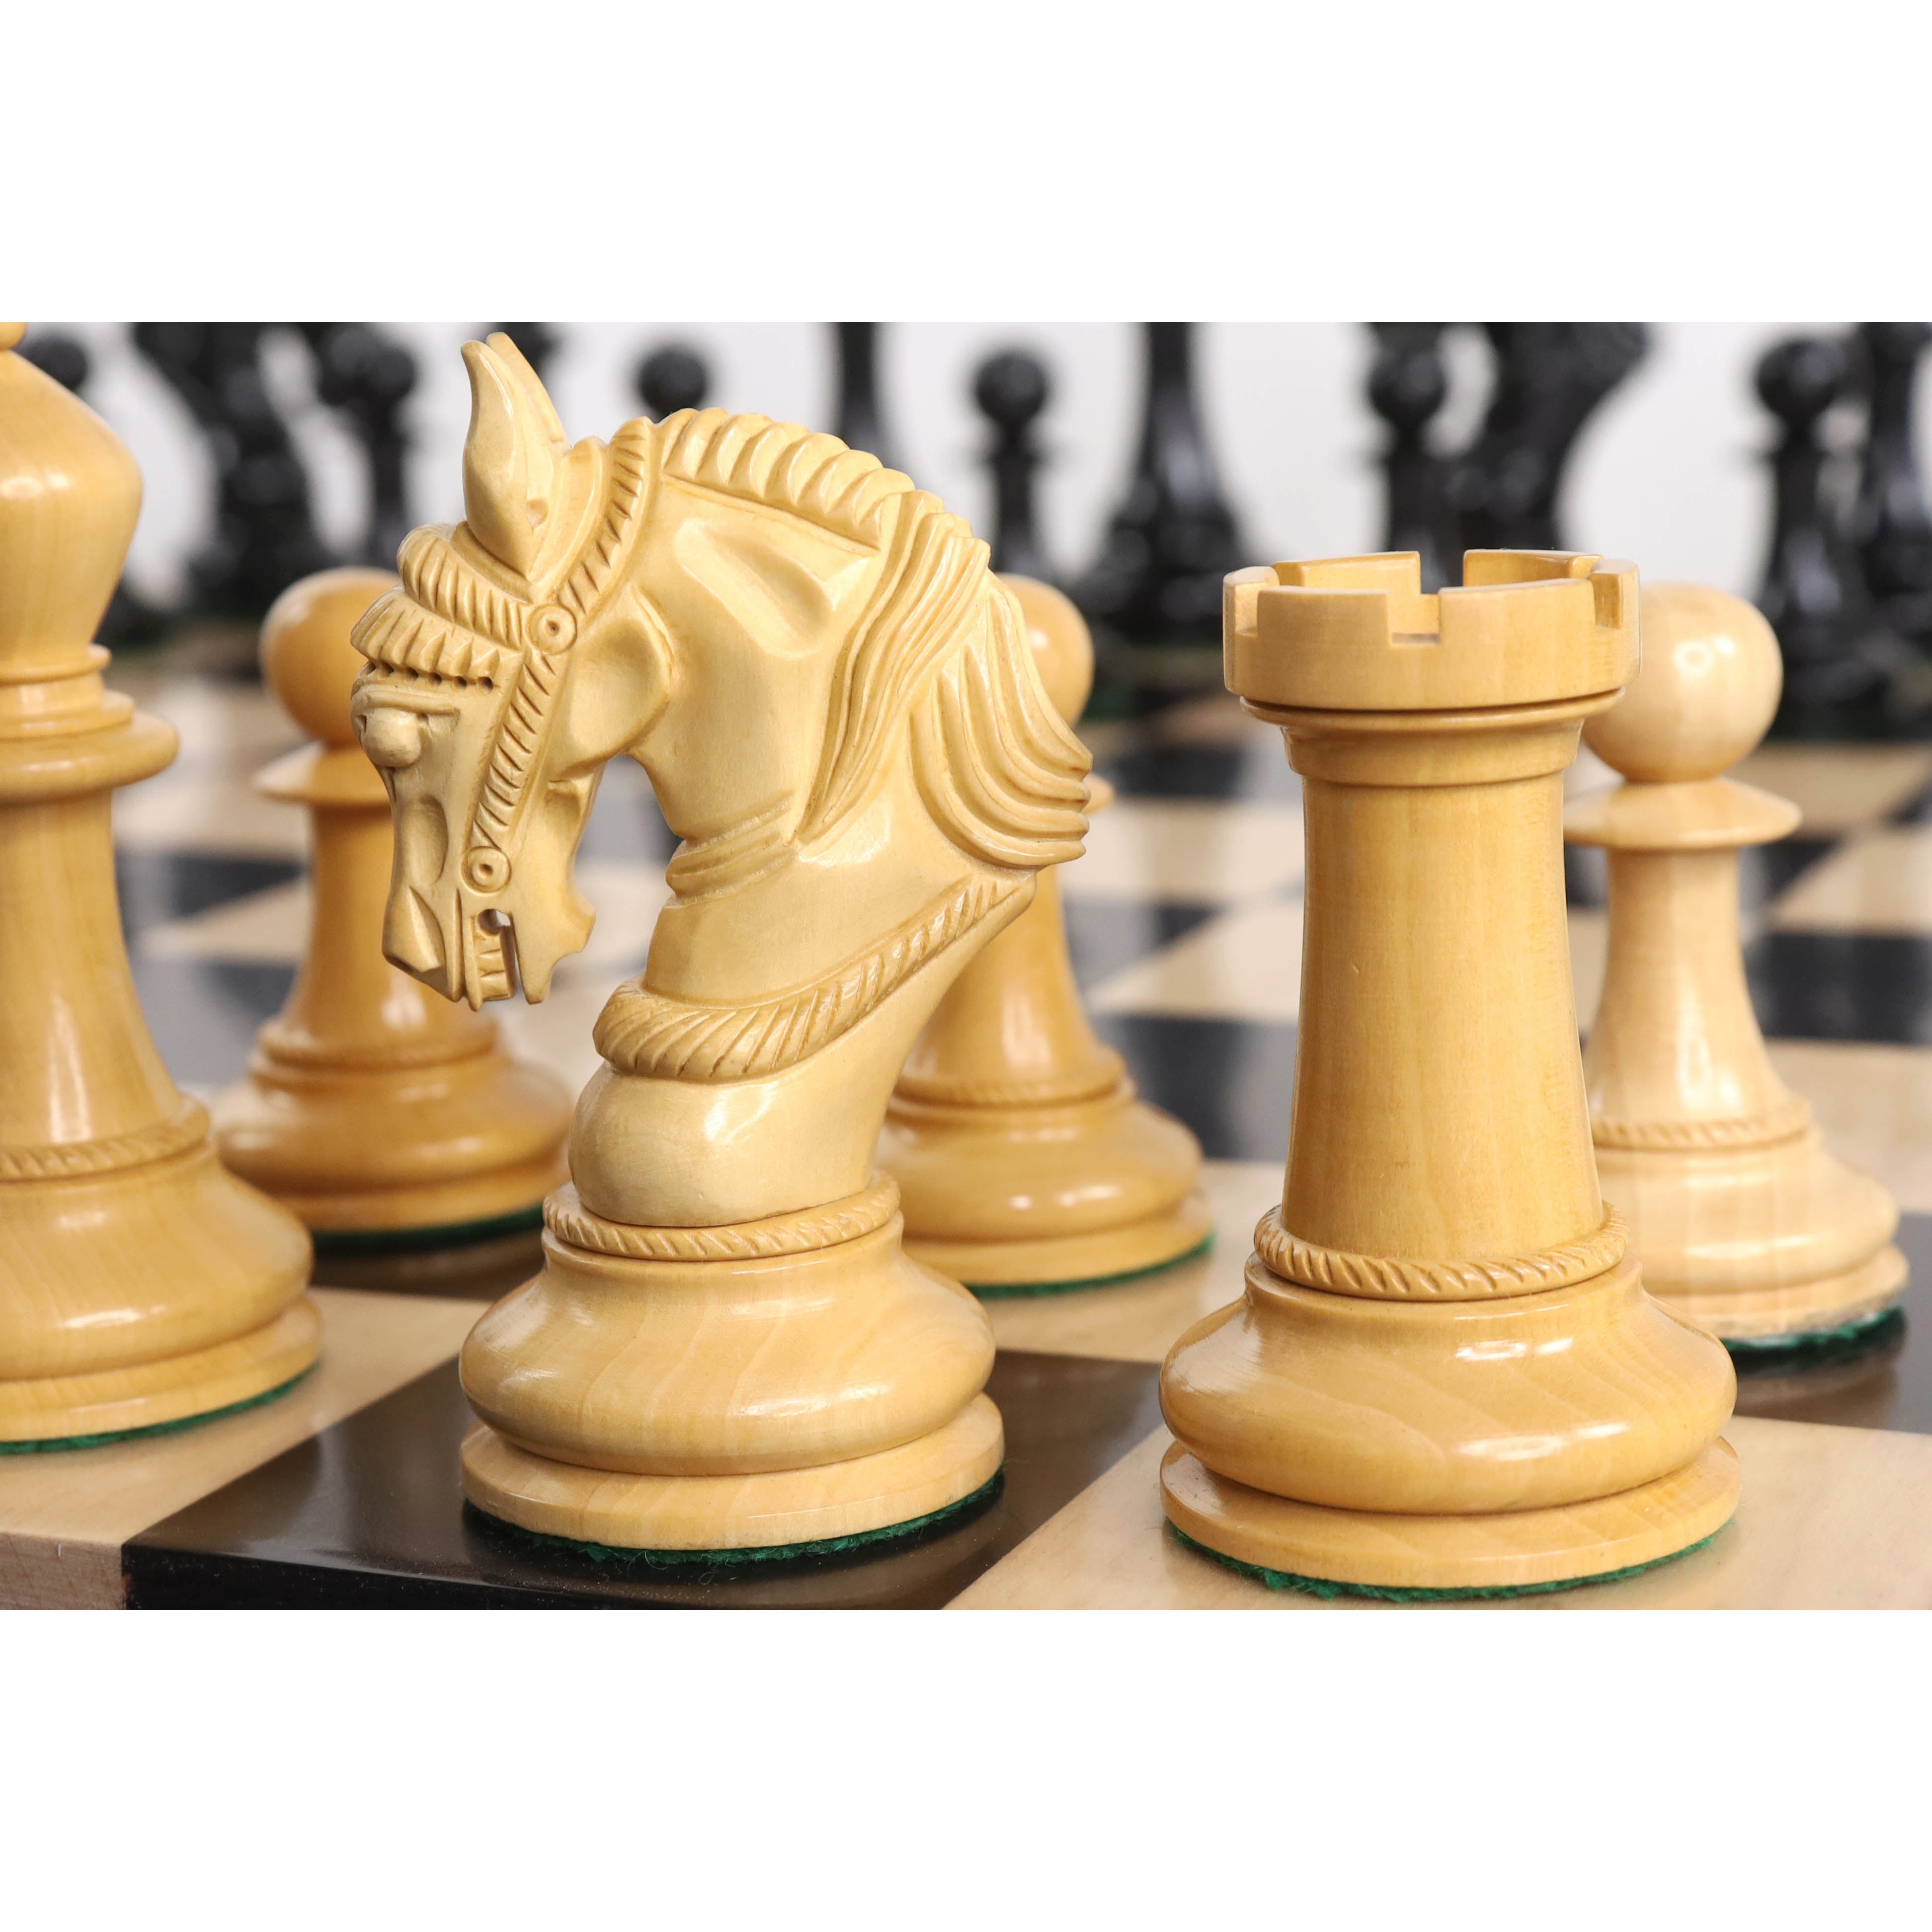 Slightly Imperfect 4.3 Grazing Knight Luxury Staunton Chess